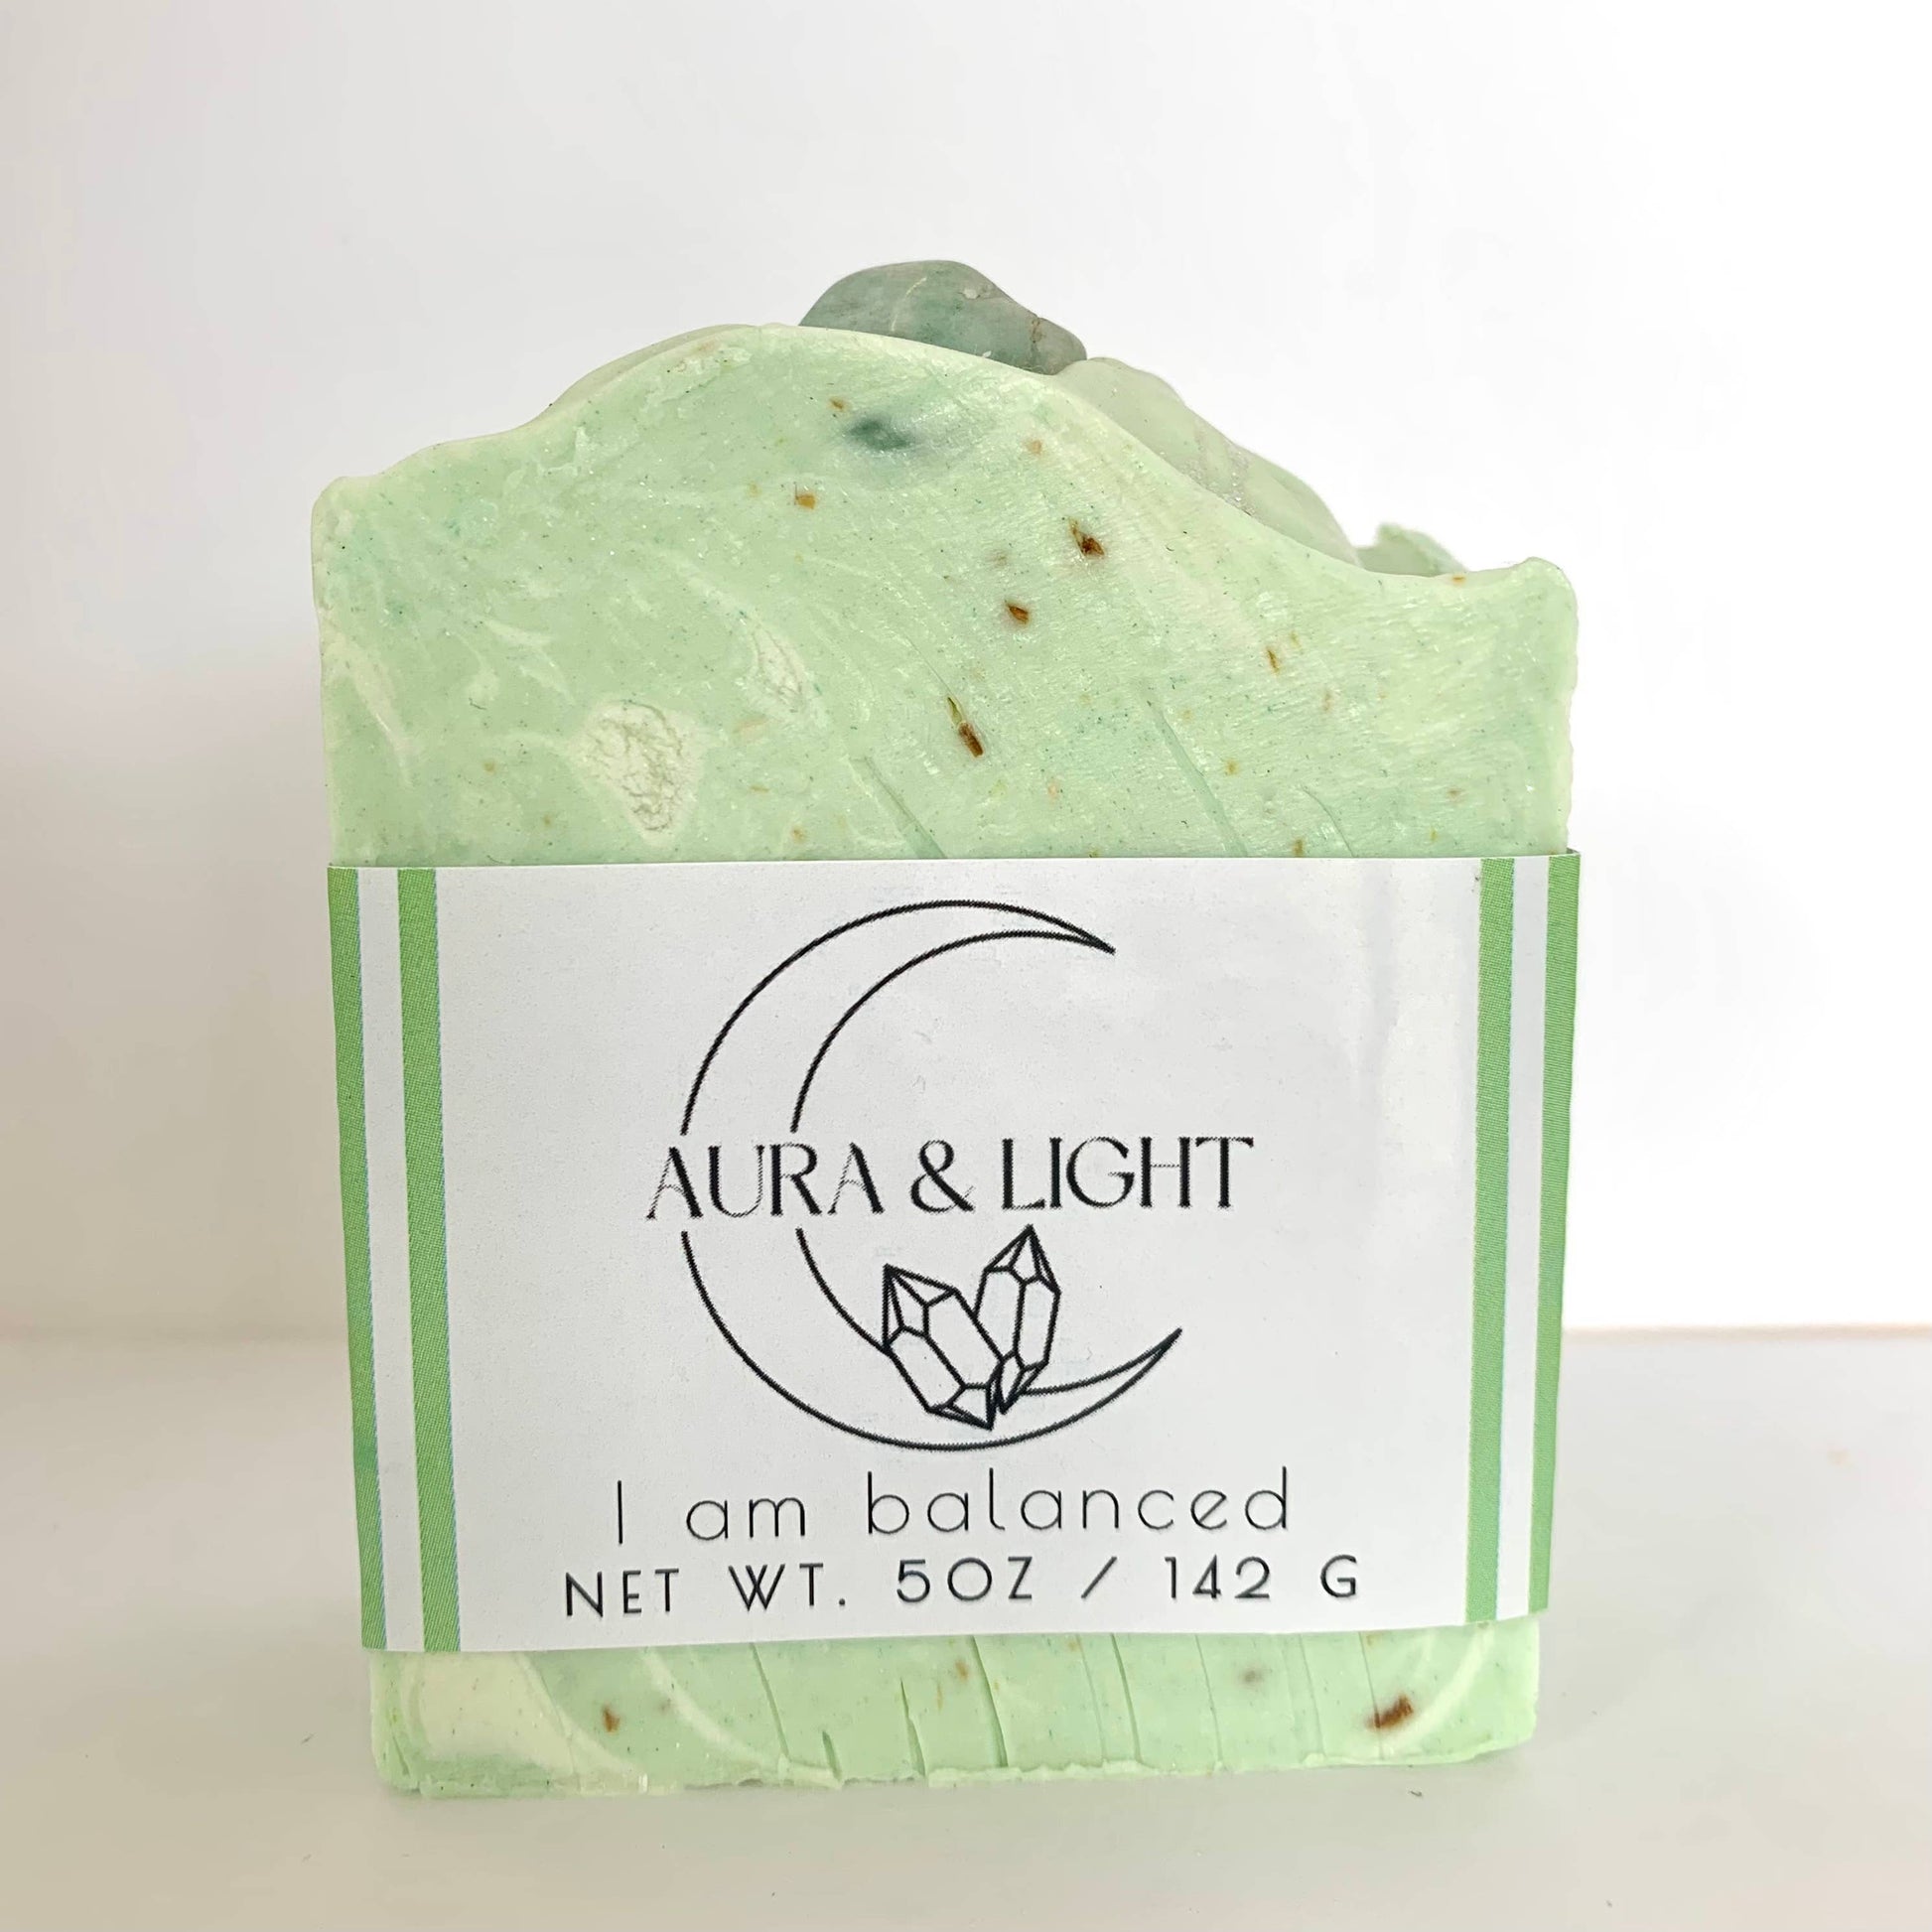 I am balanced - Aura & Light Crystal Soap - Pluff Mud Mercantile